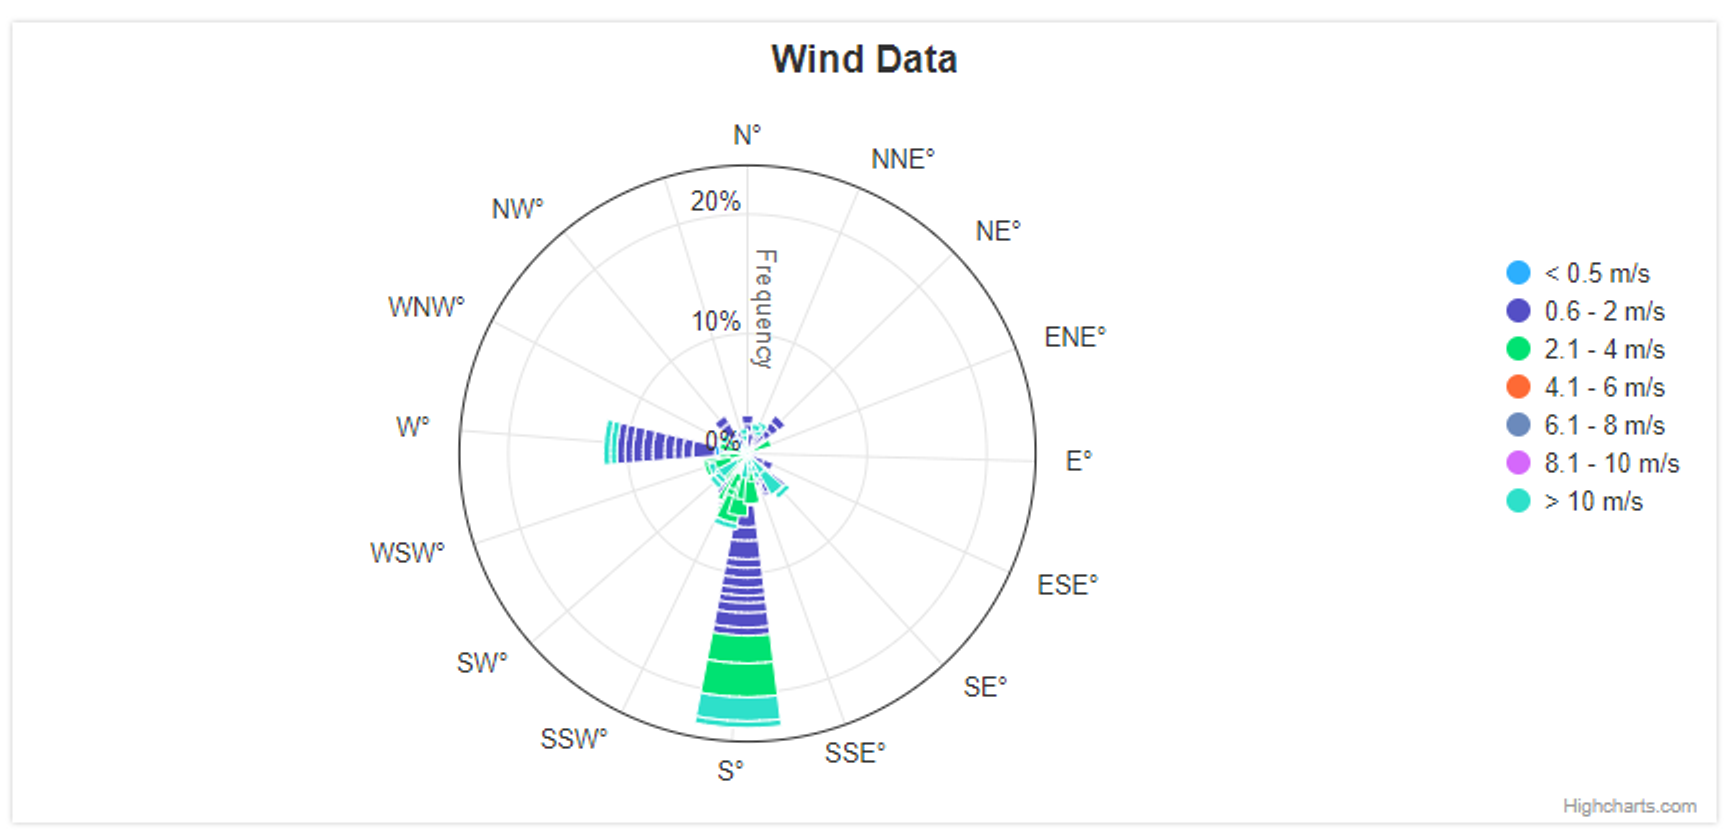 Figure 4 - Wind Data / Direction